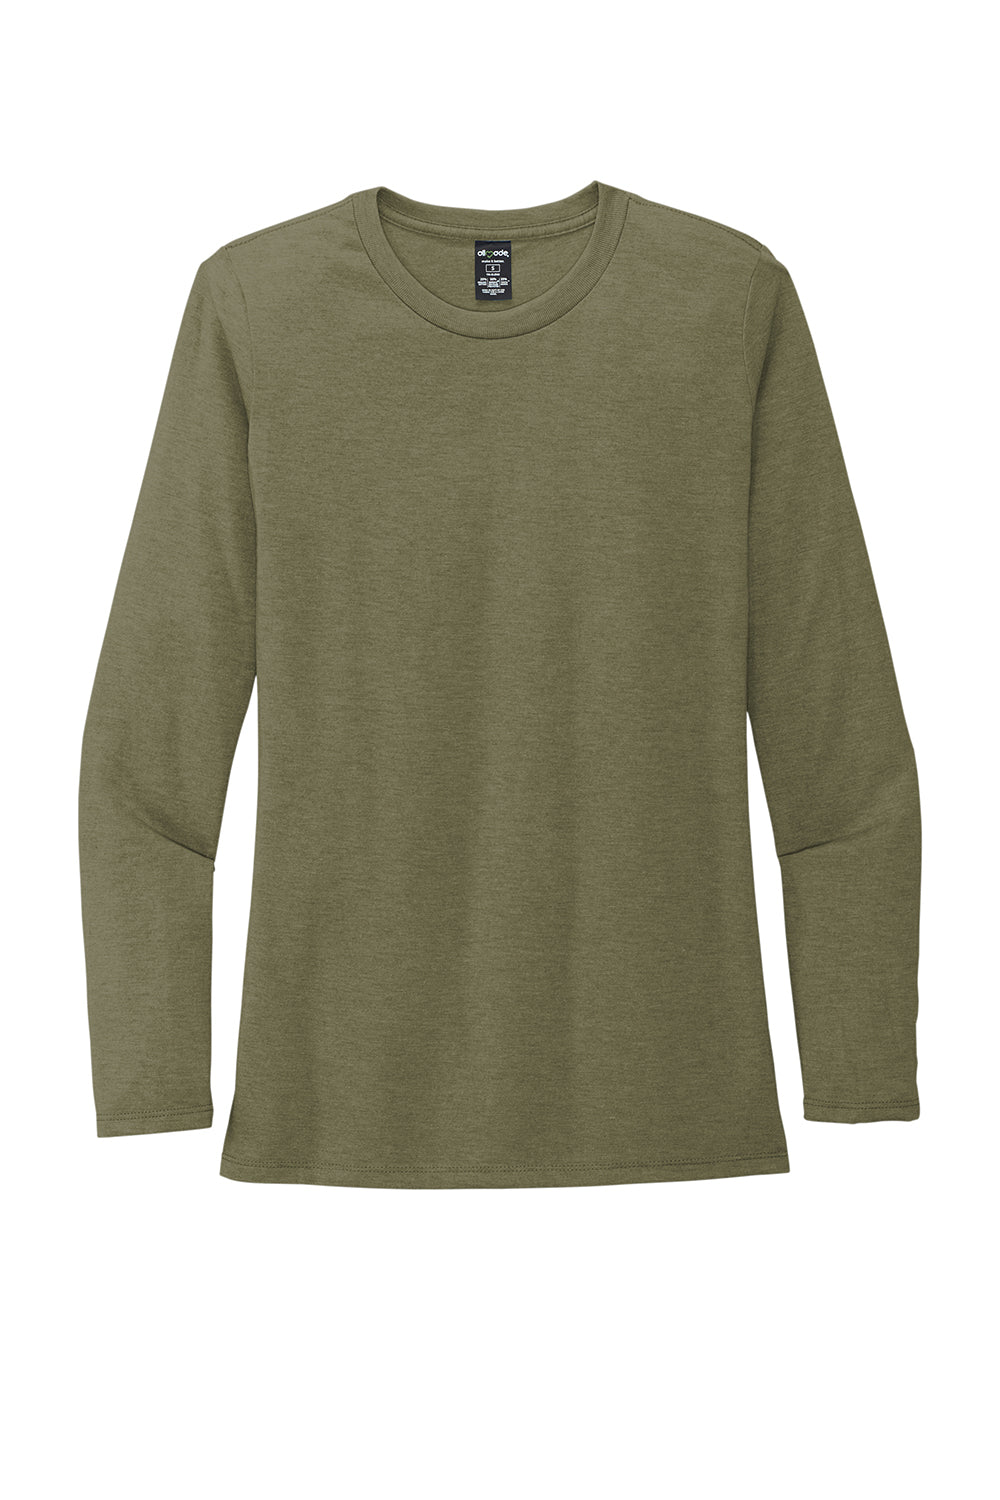 Allmade AL6008 Womens Long Sleeve Crewneck T-Shirt Olive You Green Flat Front